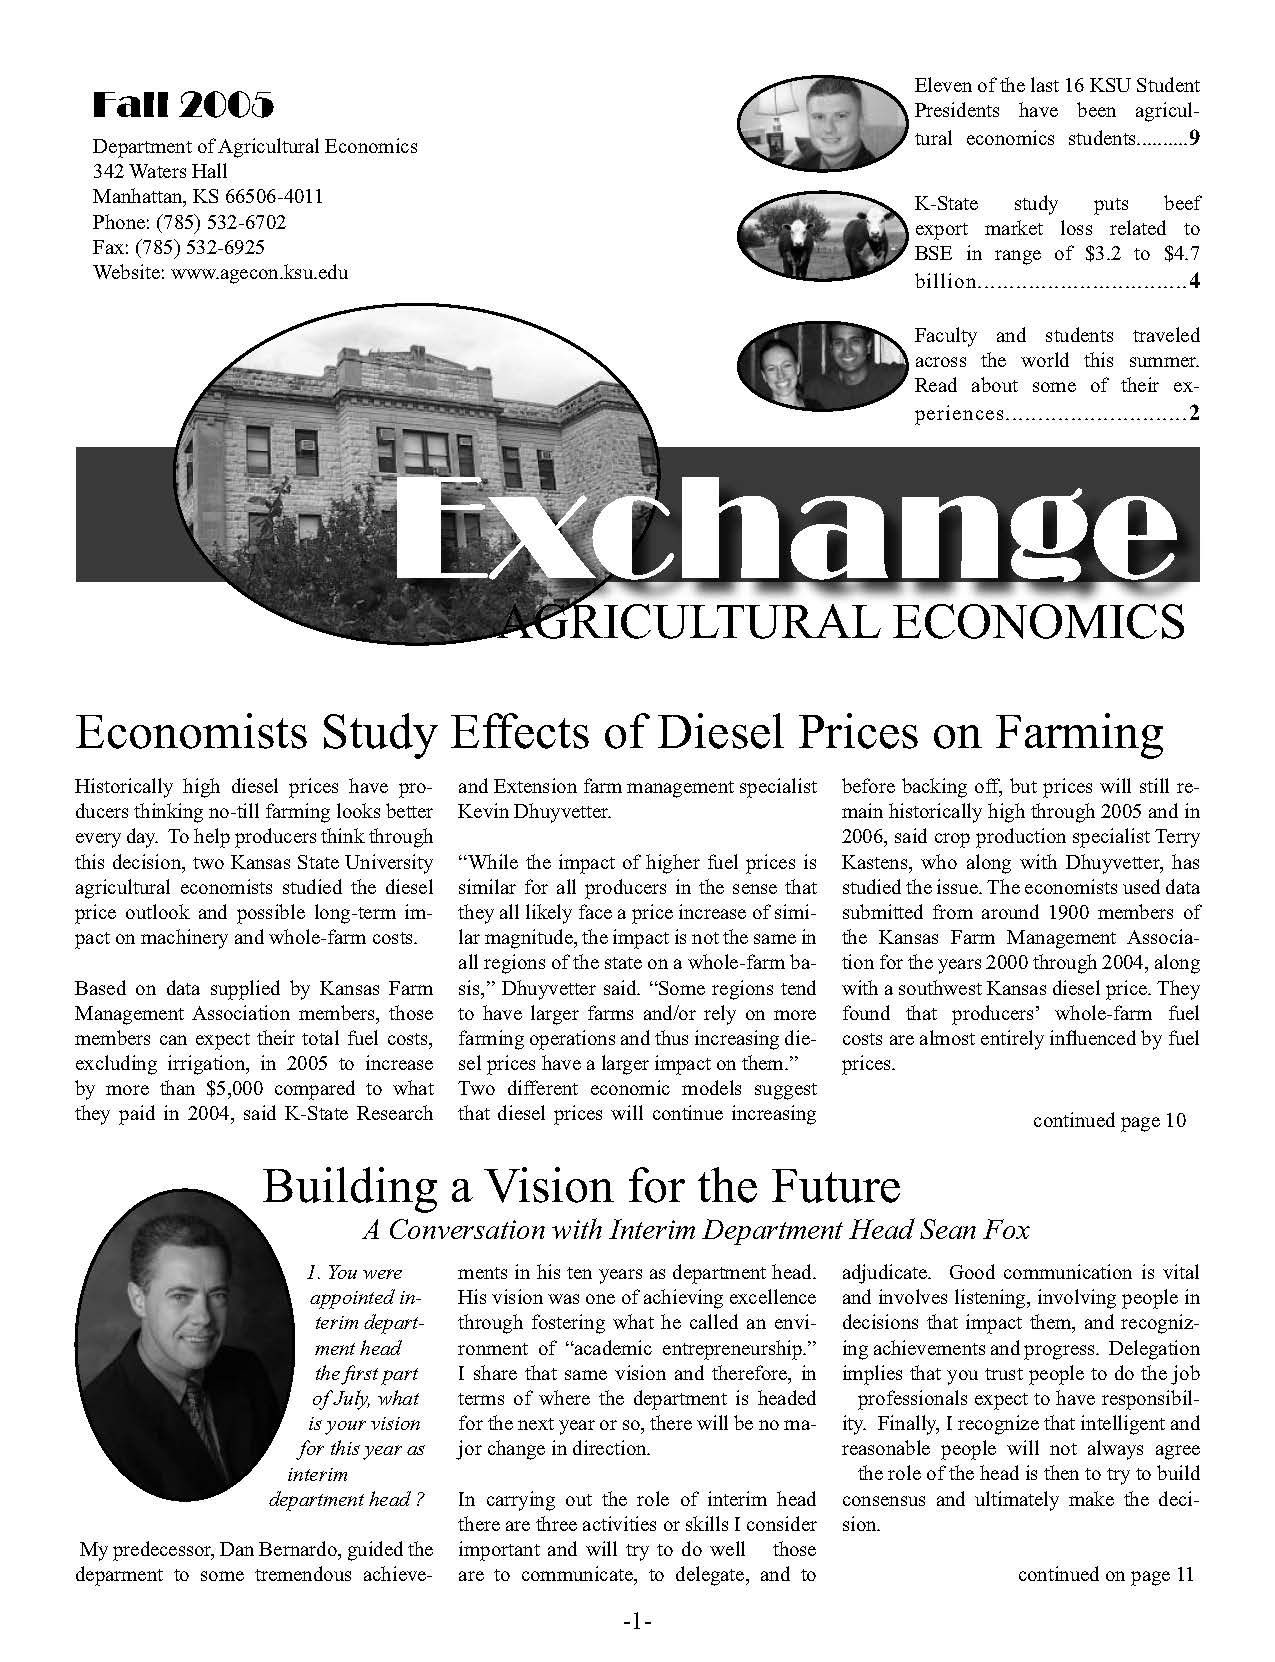 2005 Exchange